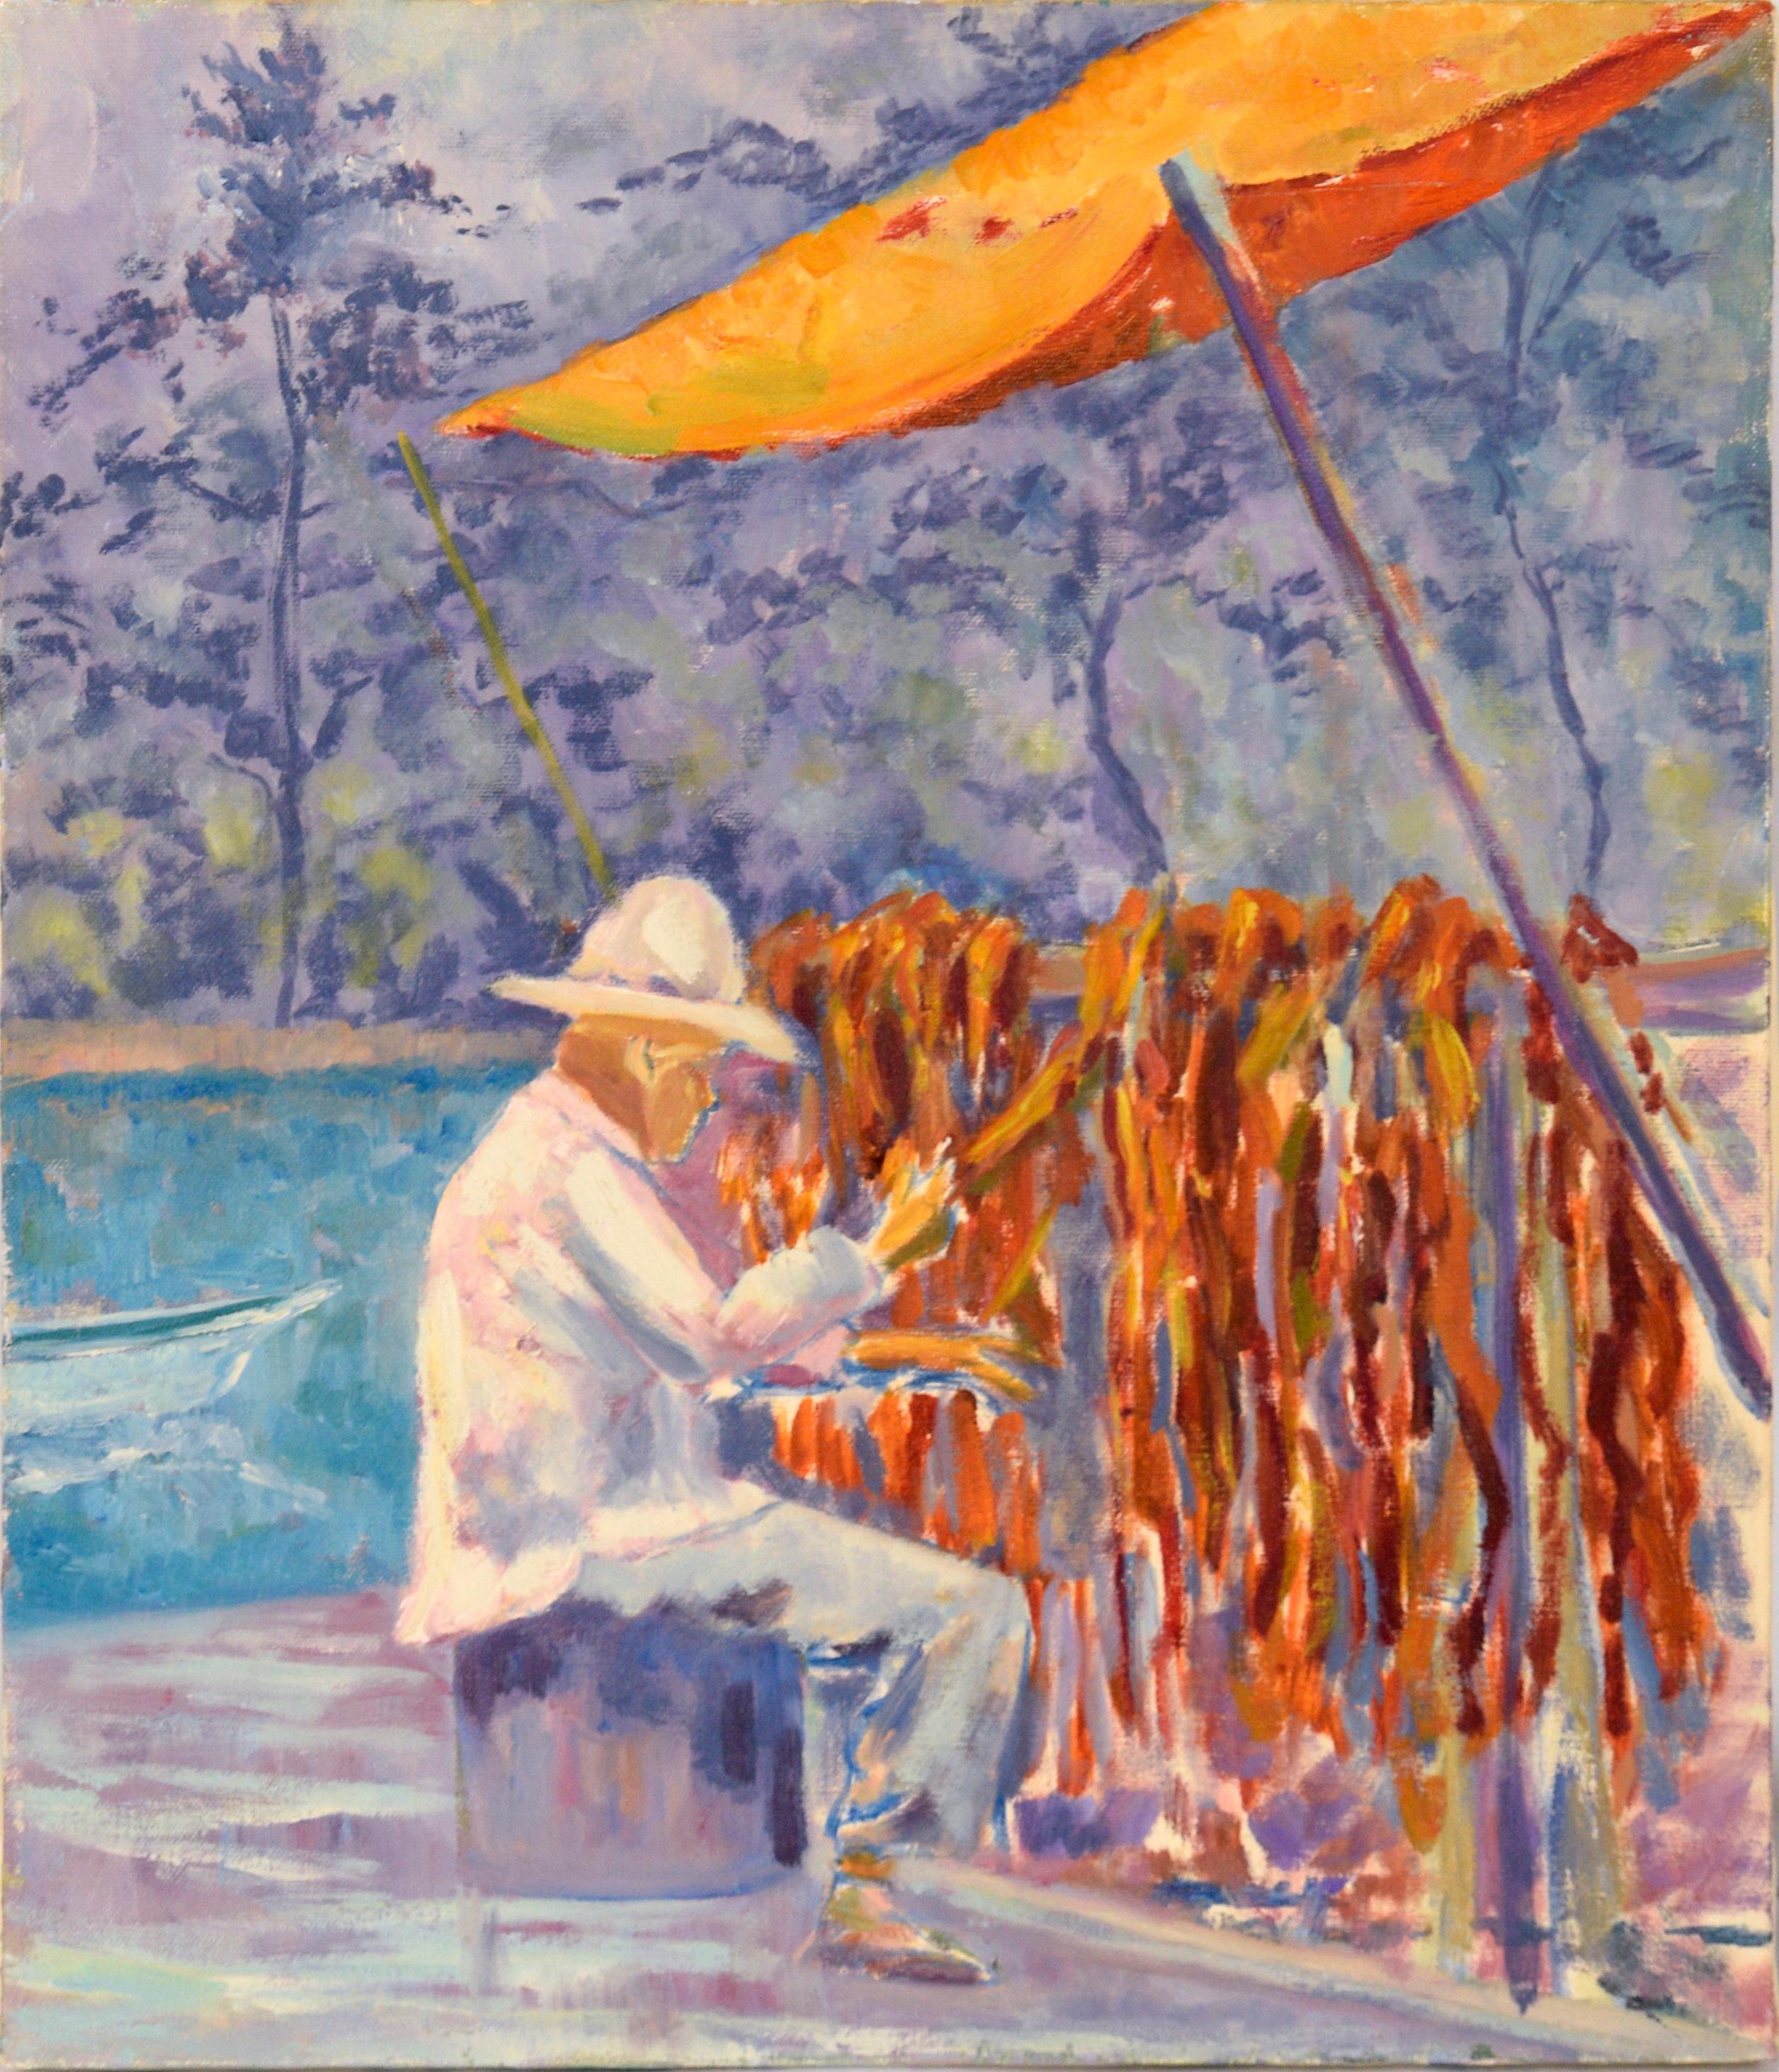 Drying Salmon Native American Smoke Tent - Figurative Oil on Canvas 